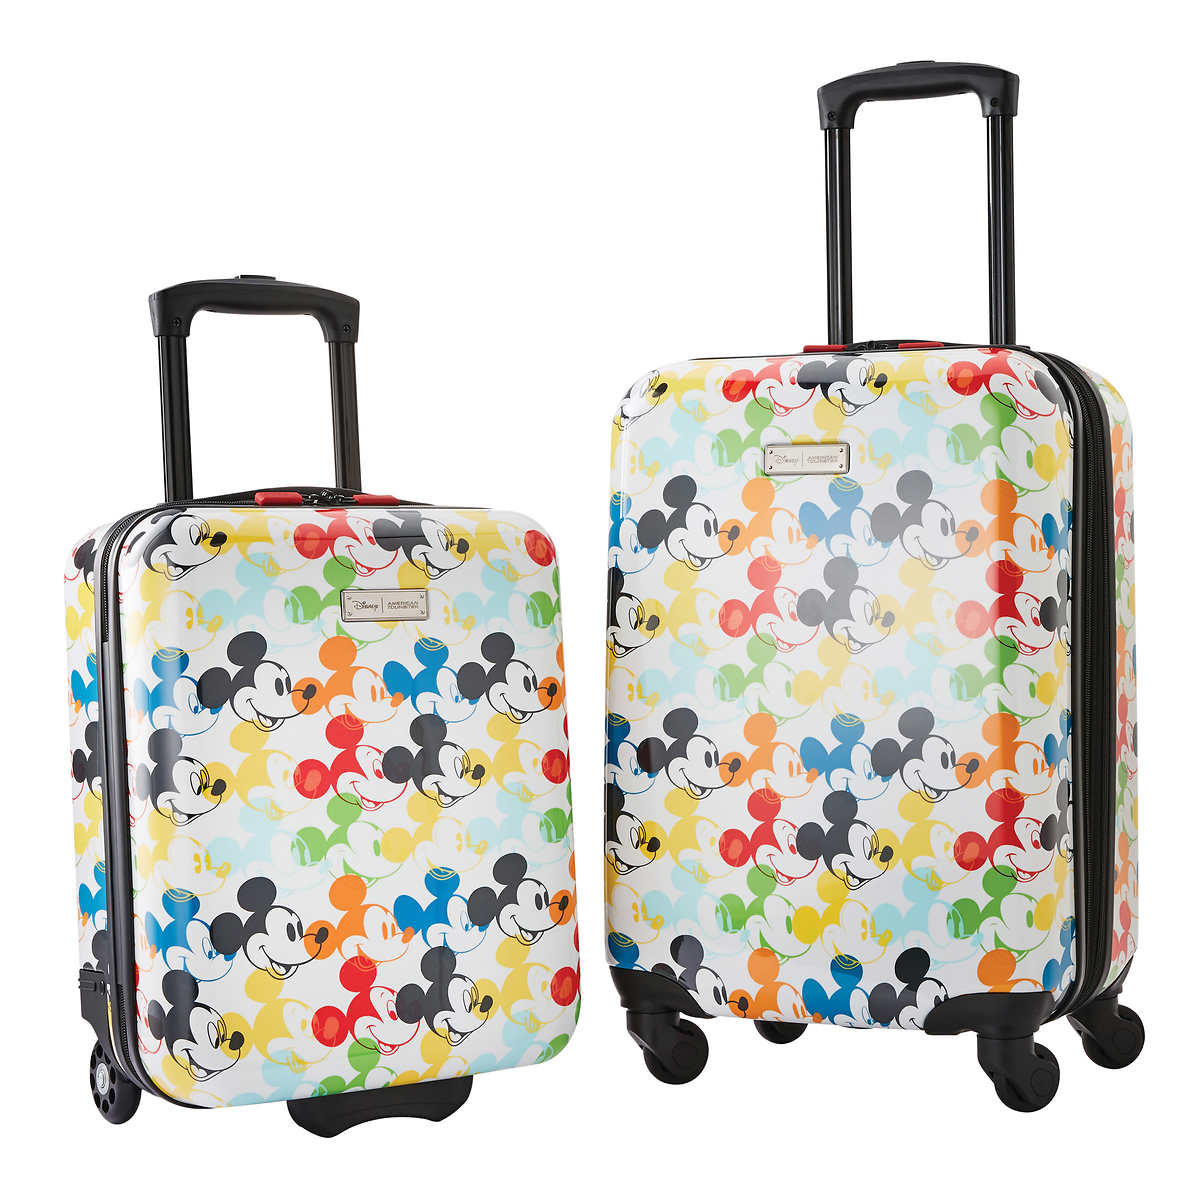 American Tourister Disney 2 Piece Hardside Carry On Luggage Set